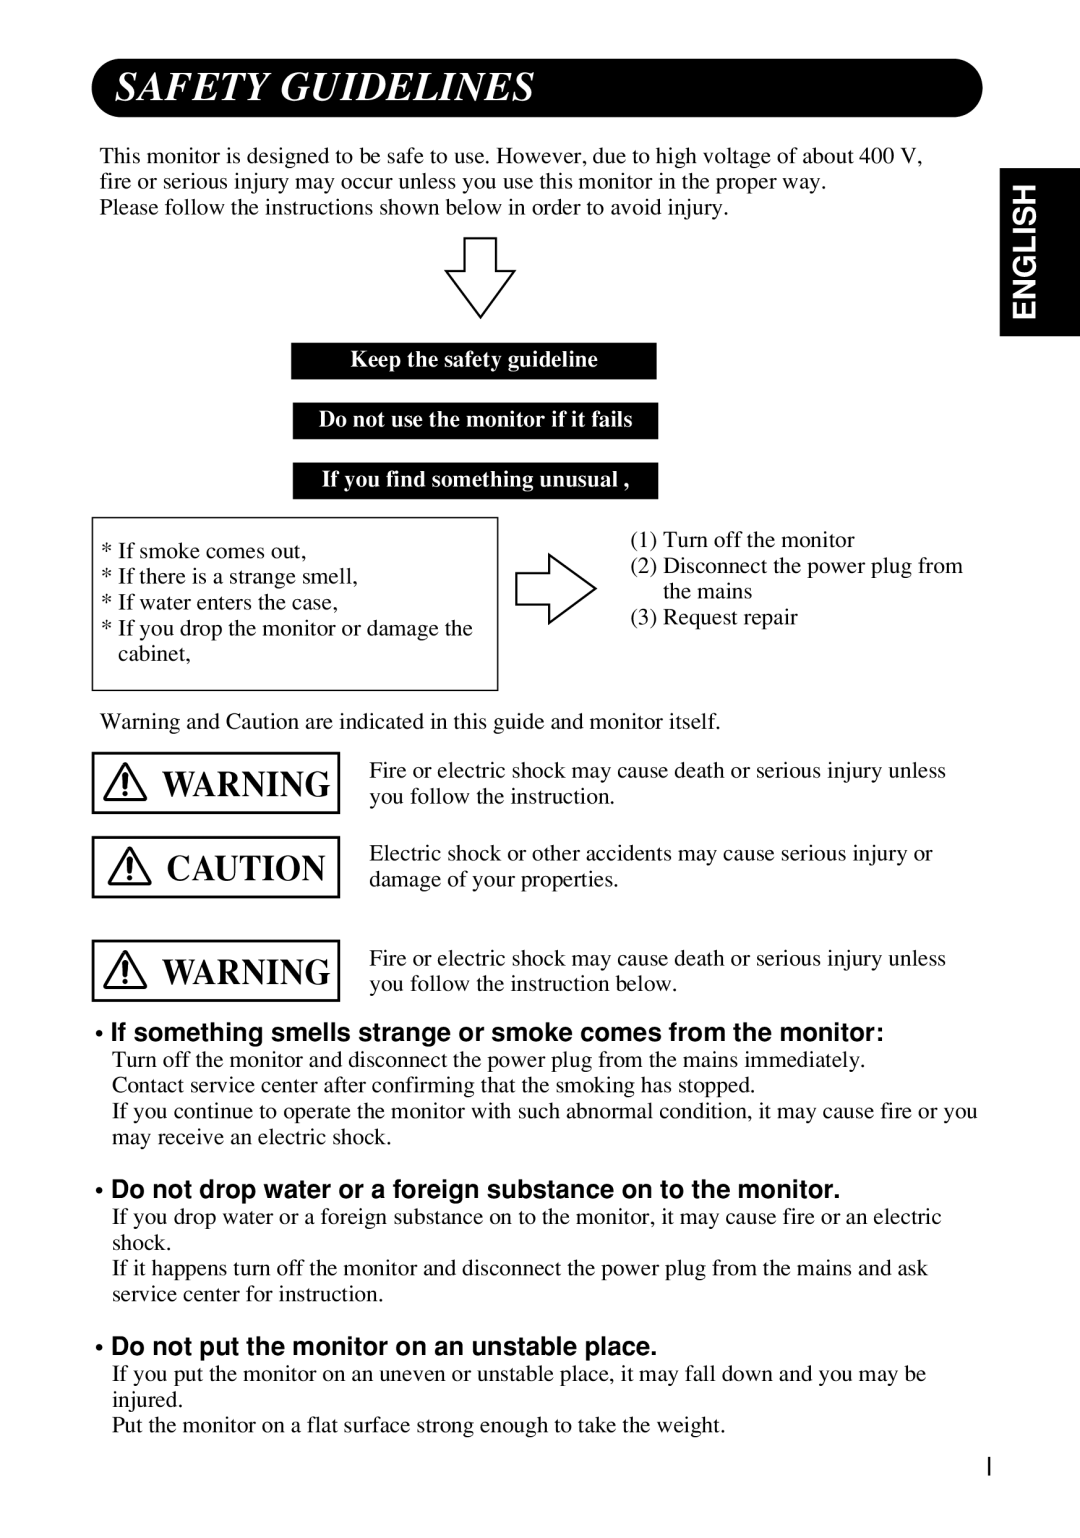 Hitachi Koki USA CMP4120HDUS Safety Guidelines, English, If something smells strange or smoke comes from the monitor 